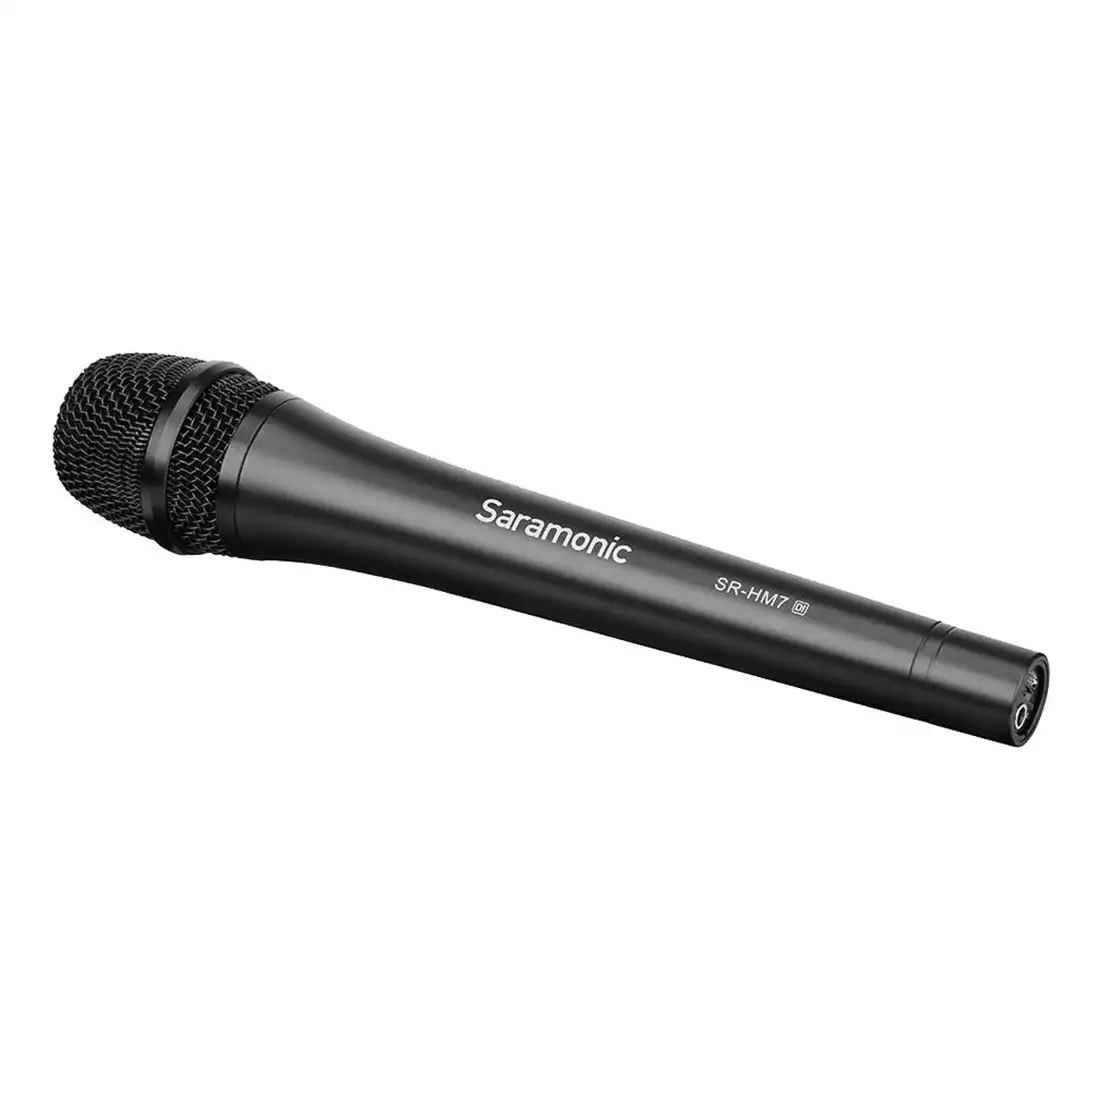 Saramonic SR-HM7 DI Handheld Dynamic USB Microphone for iOS Devices - Black